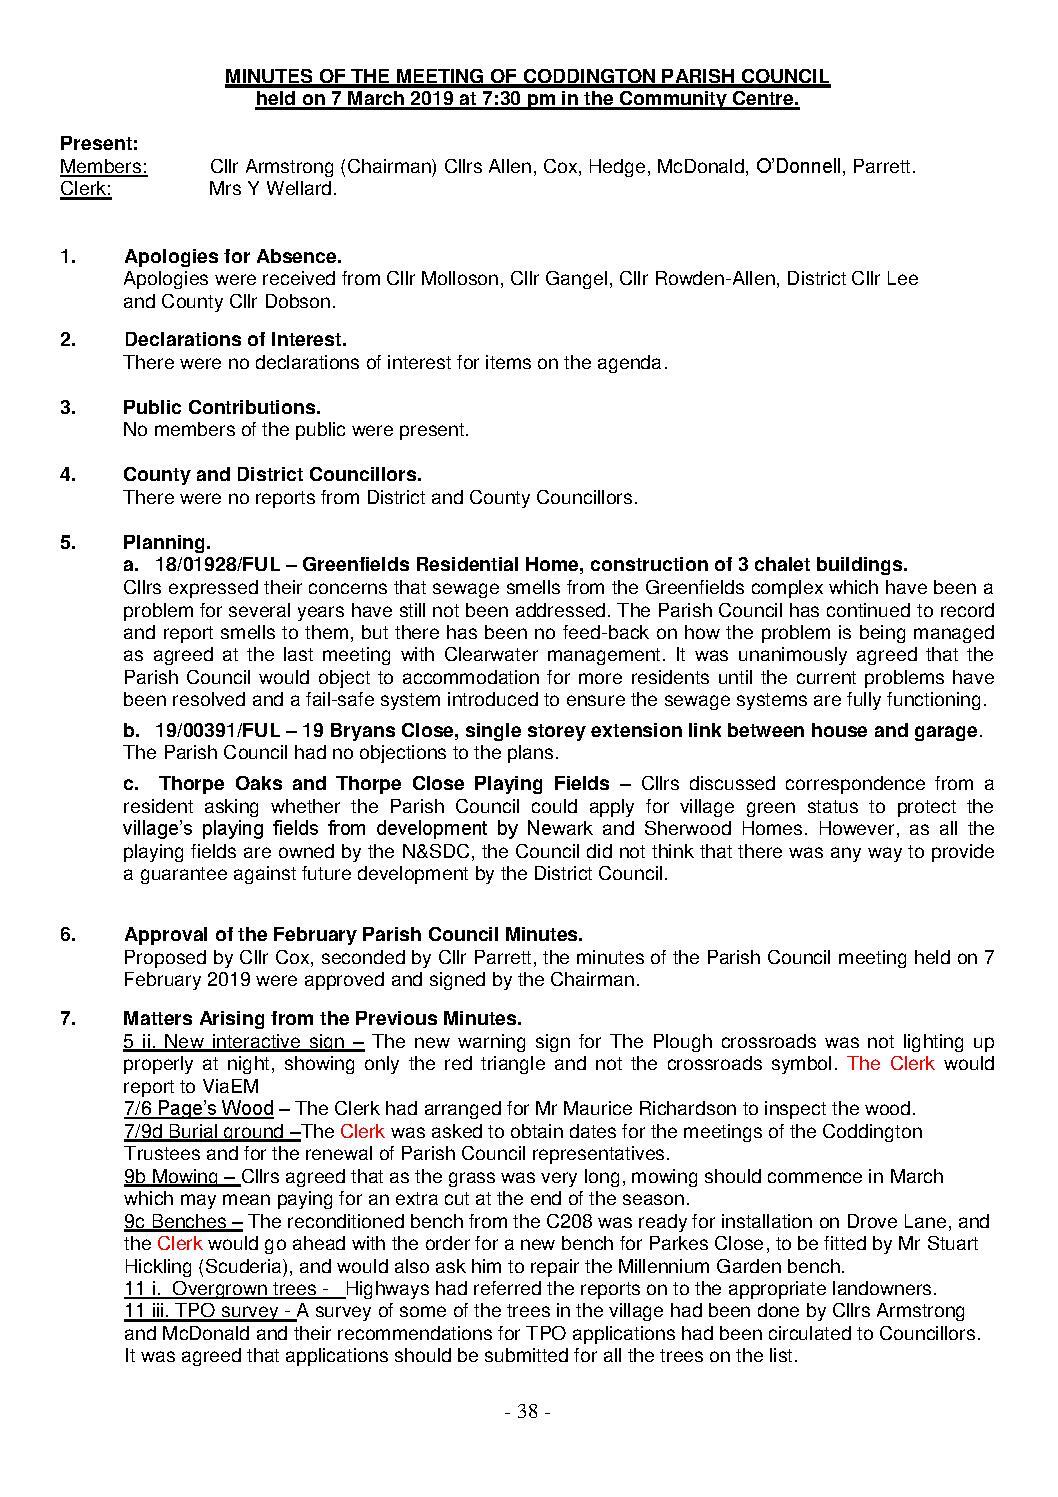 Parish Council Meeting 7 March 2019 Minutes